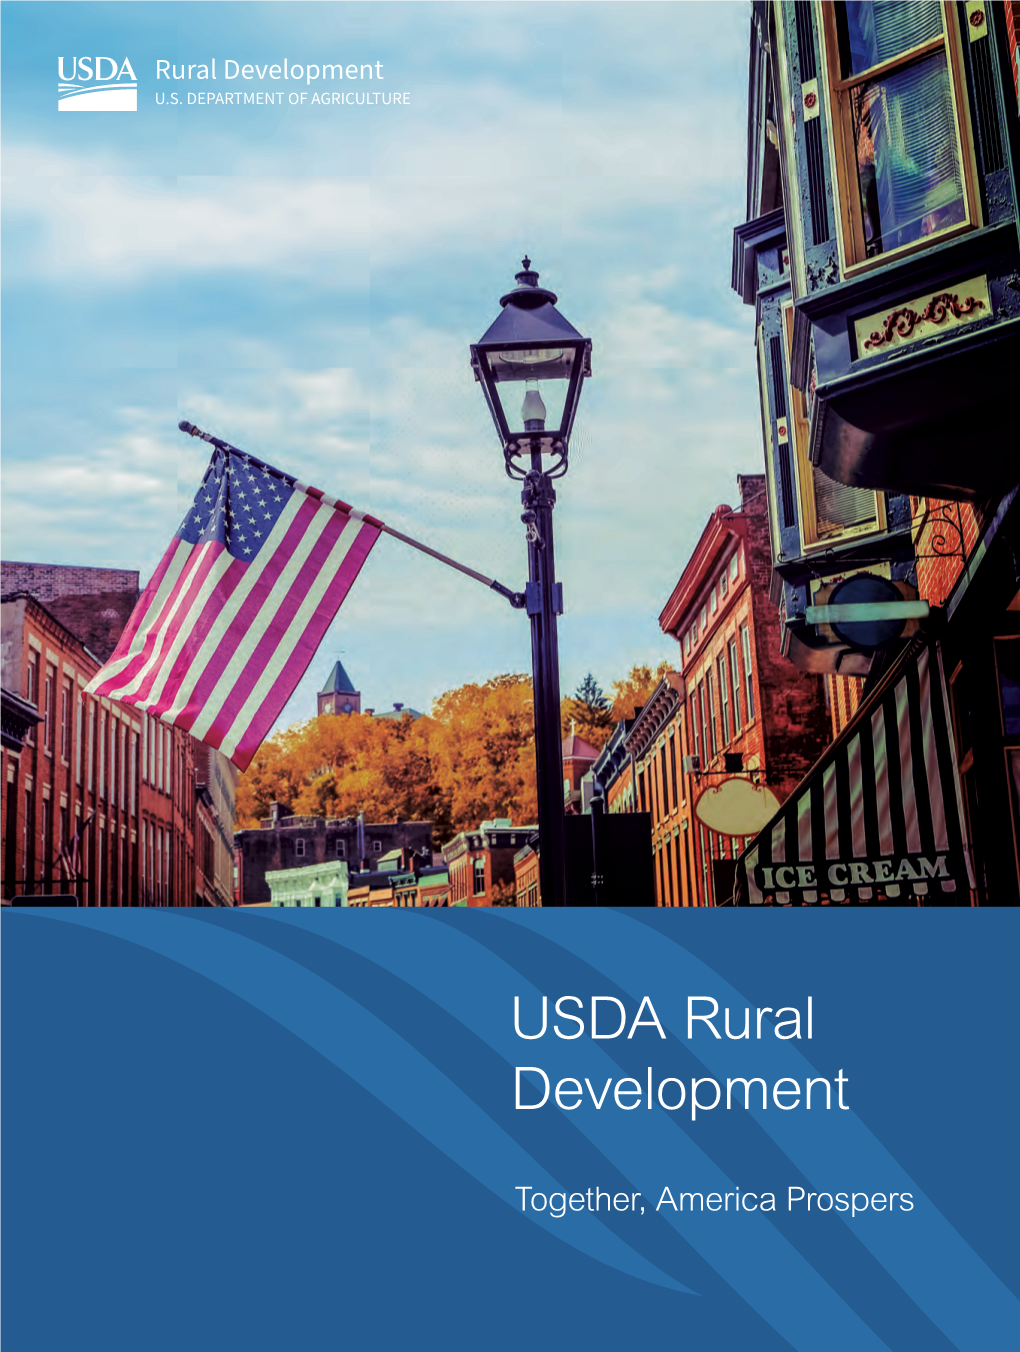 USDA Rural Development Overview Report: Together, America Prospers